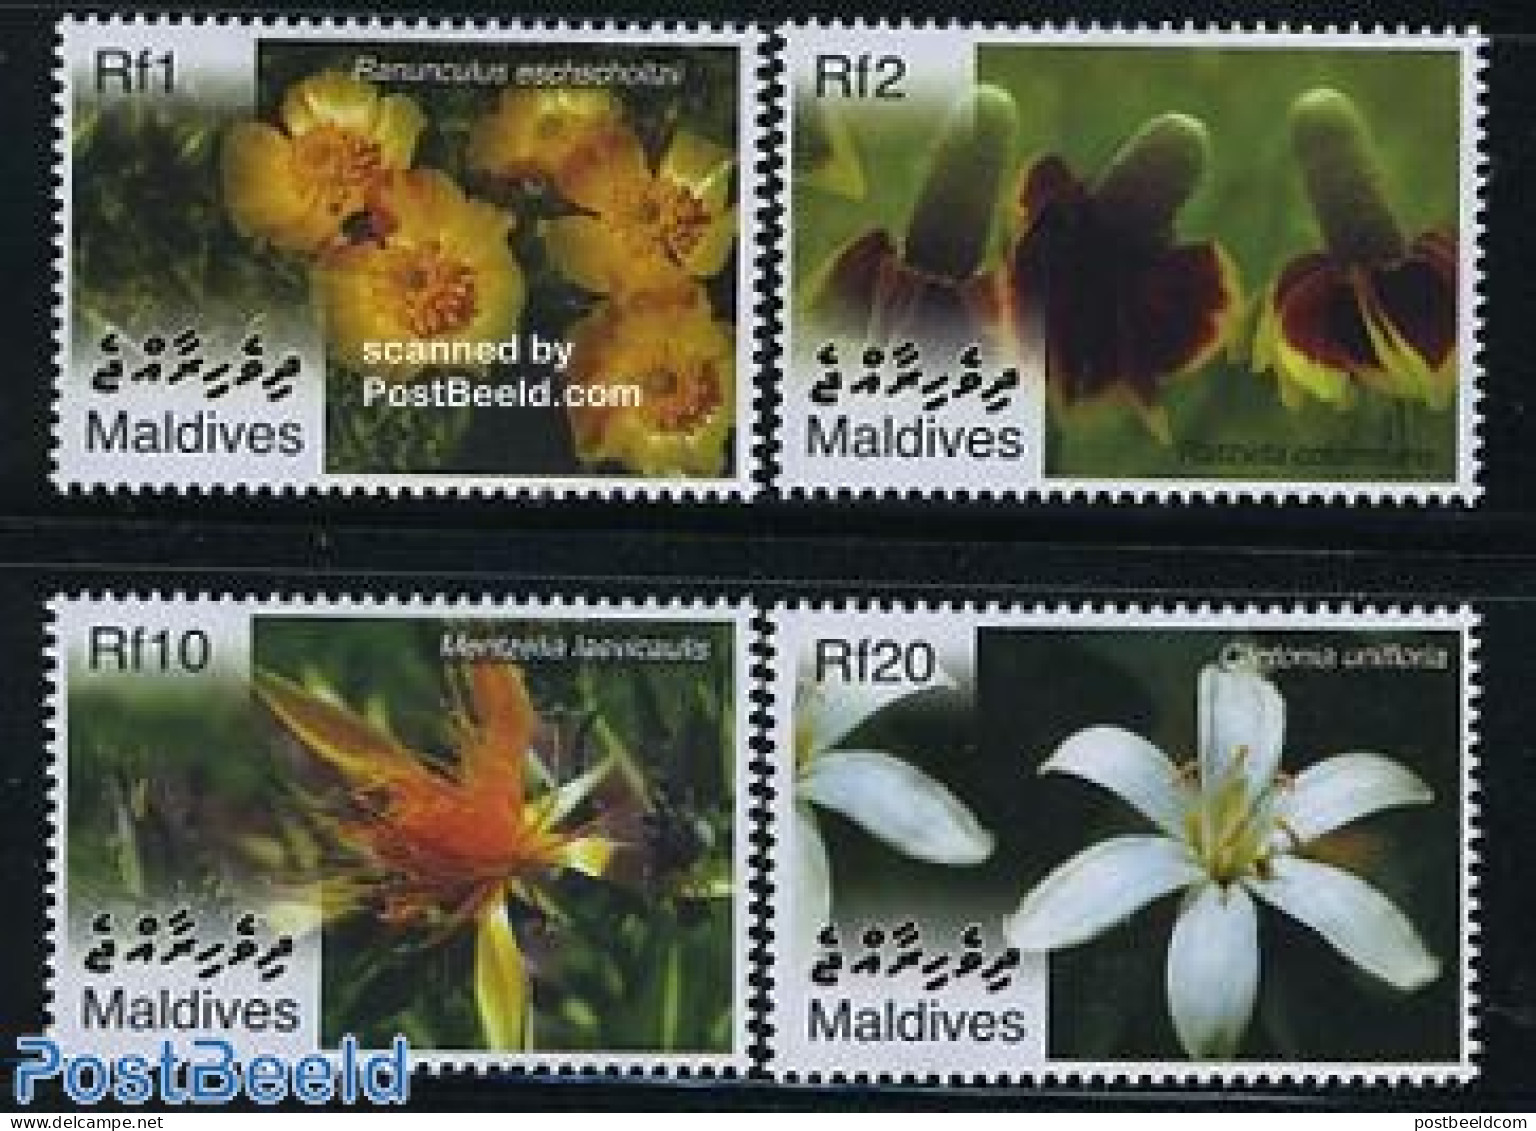 Maldives 2007 Flowers 4v, Mint NH, Nature - Flowers & Plants - Malediven (1965-...)